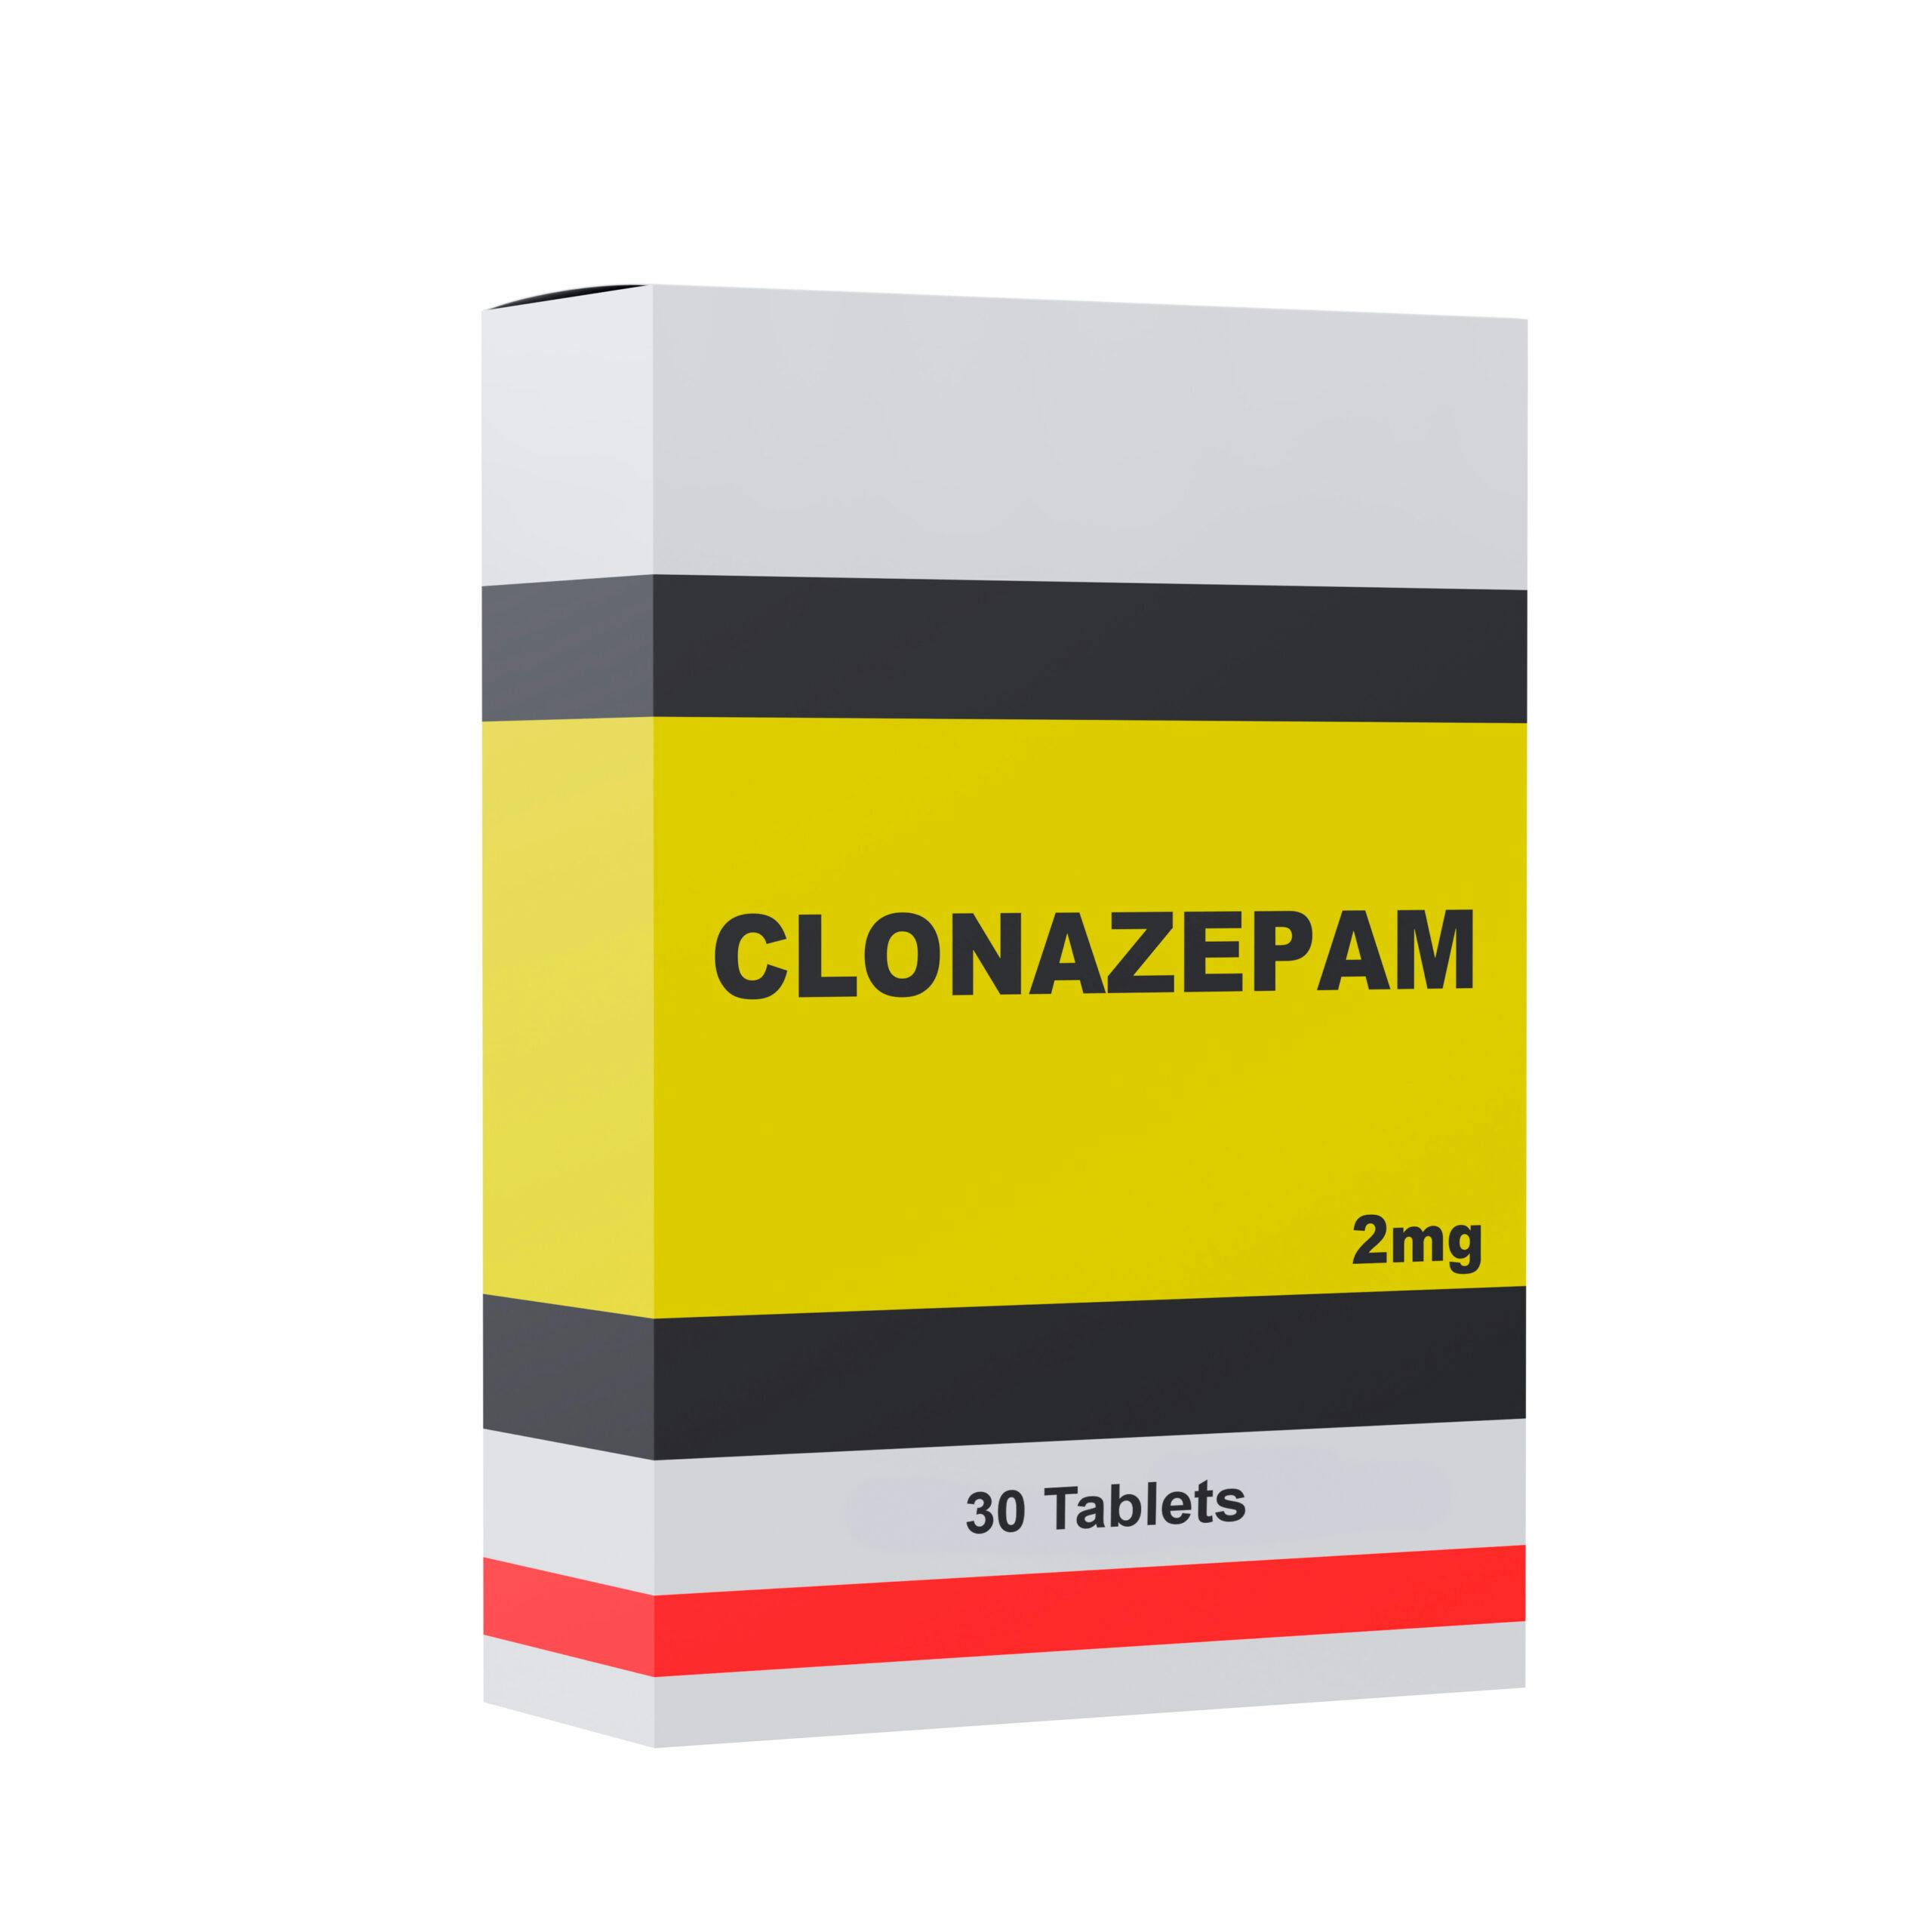 clonazepam box with 30 mg